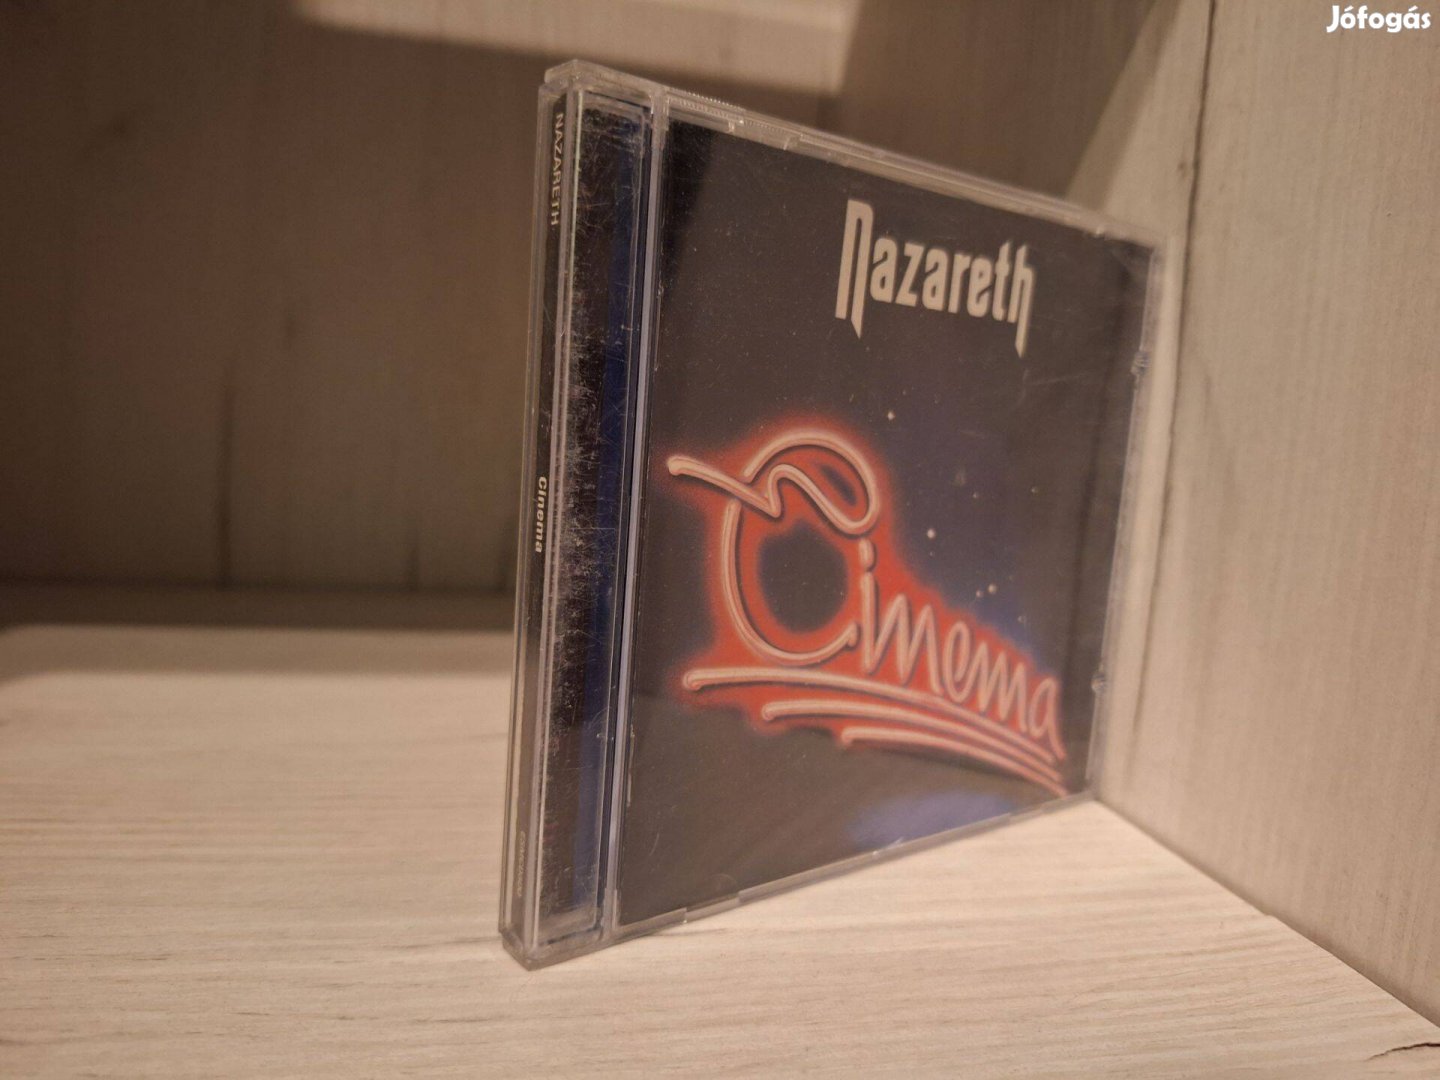 Nazareth - Cinema CD